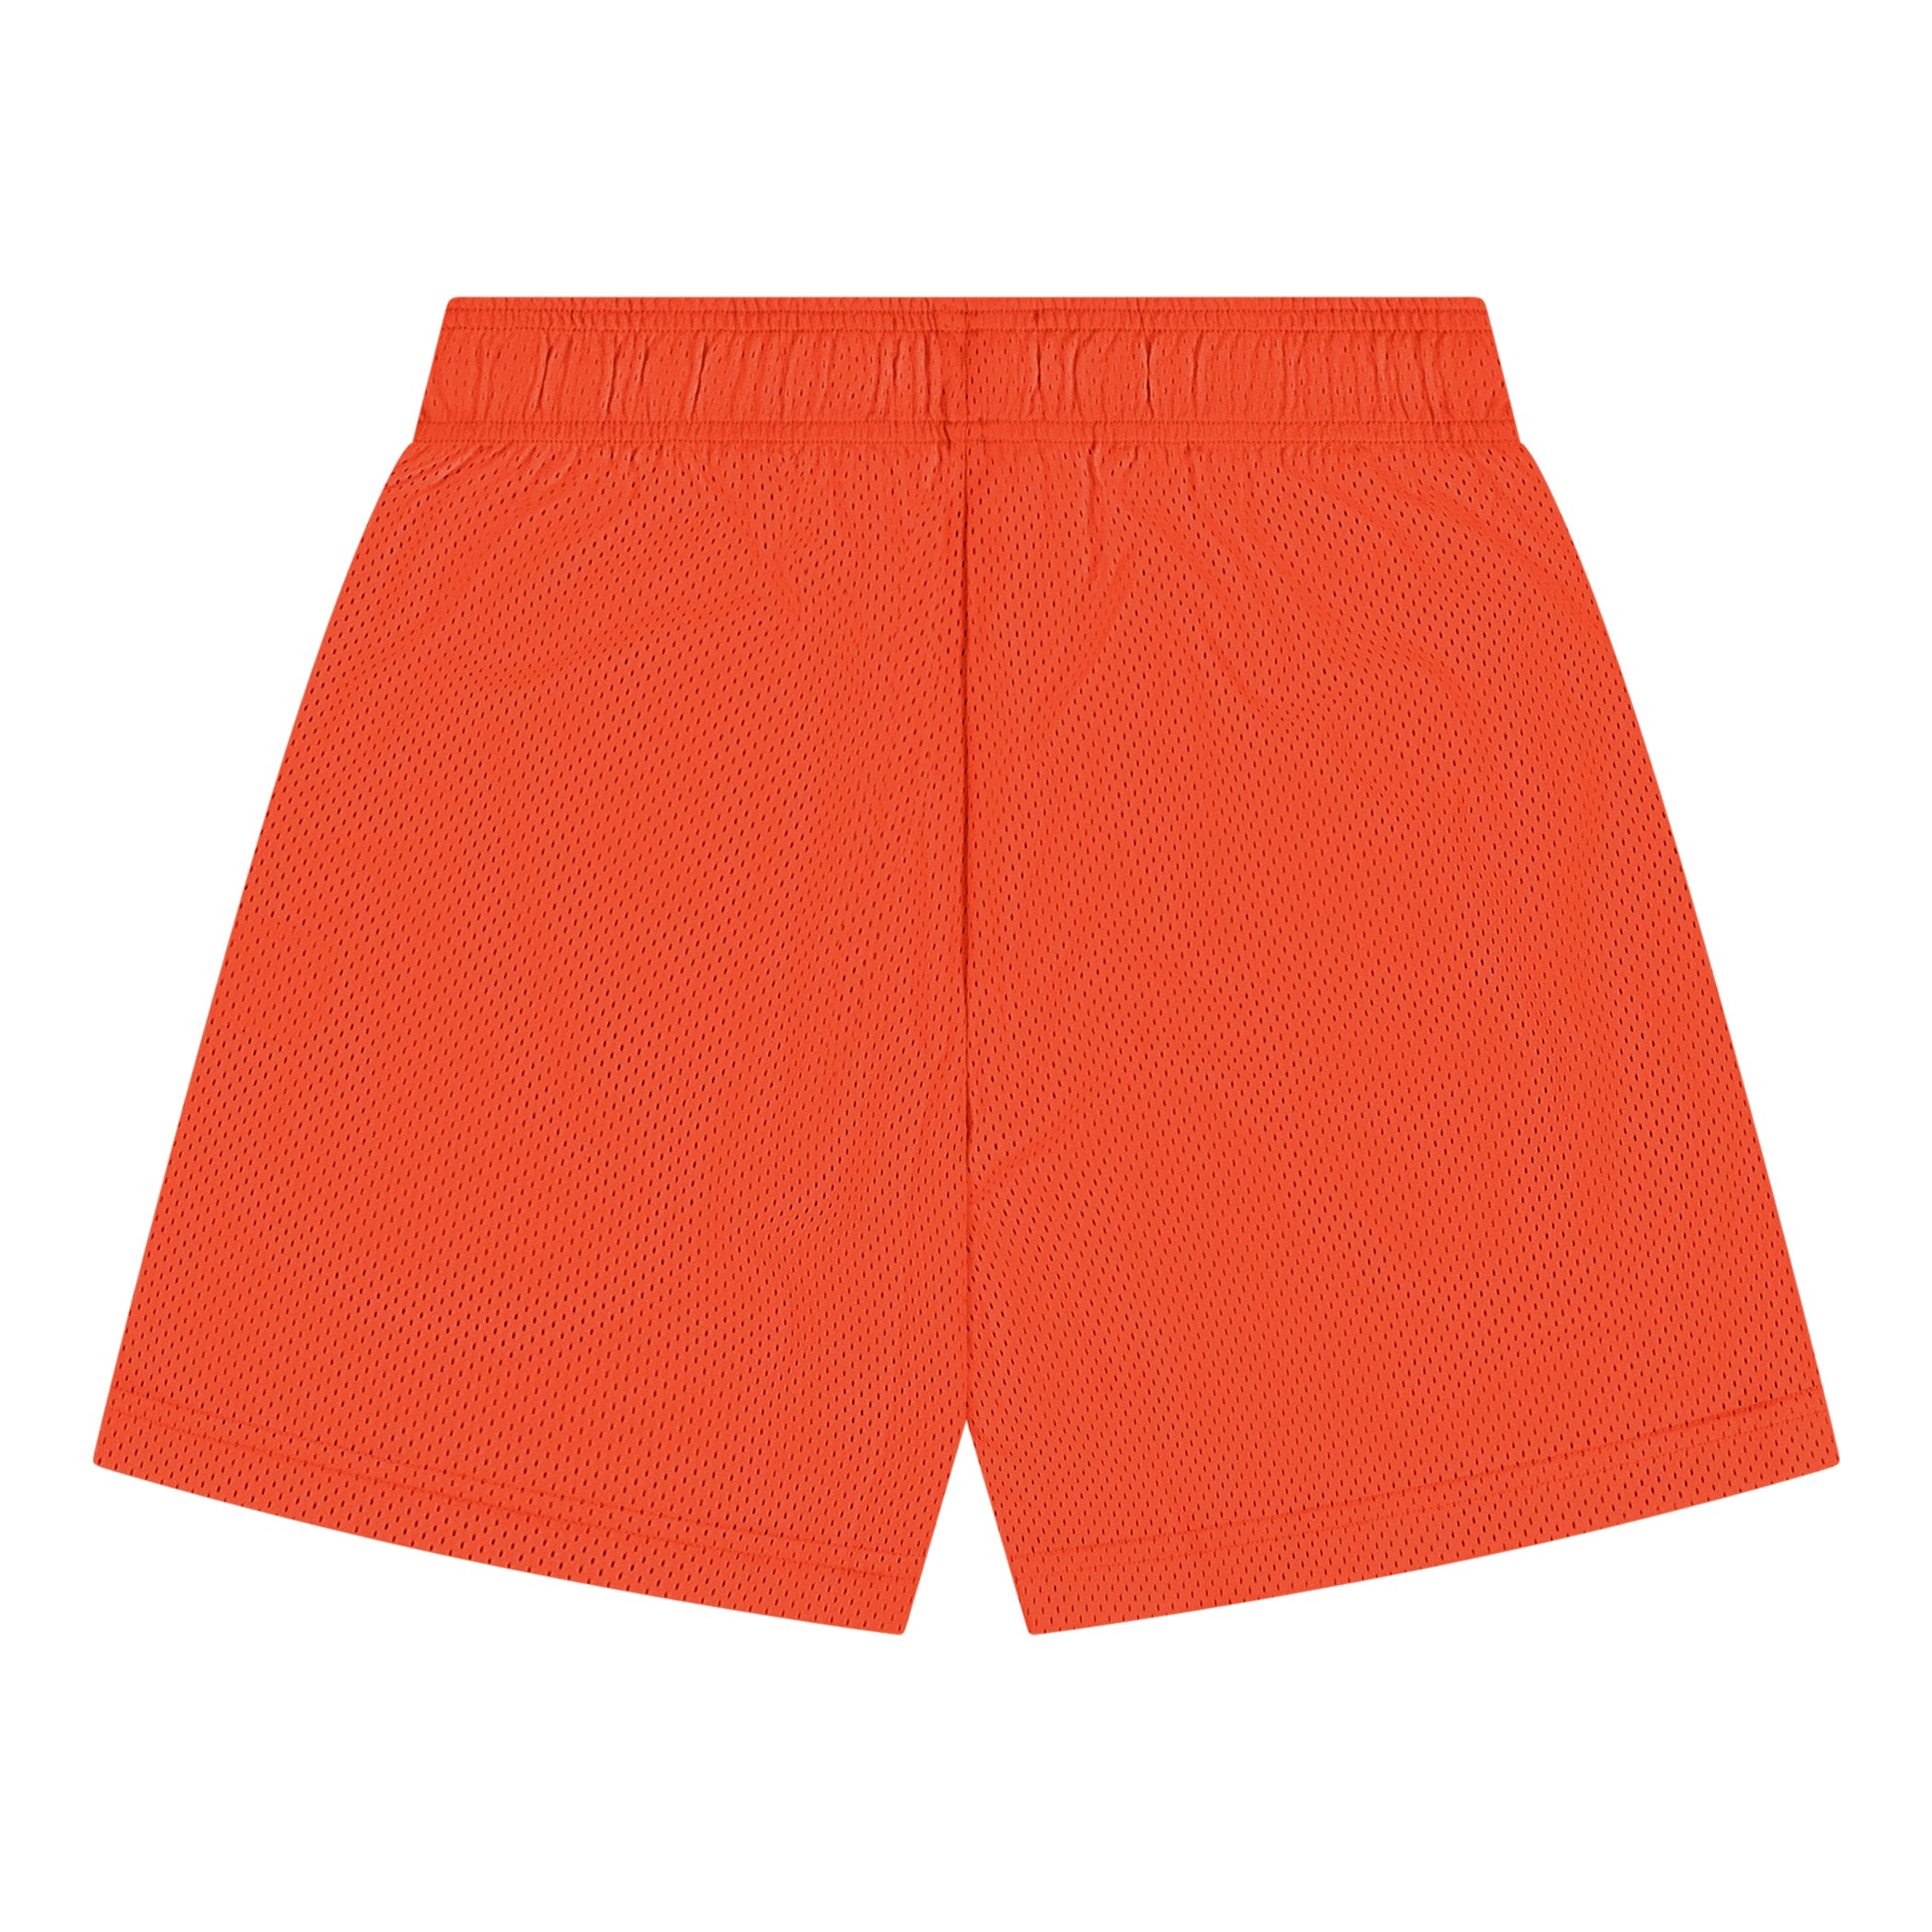 ERIC EMANUEL EE 基本款短裤 橙色/粉色